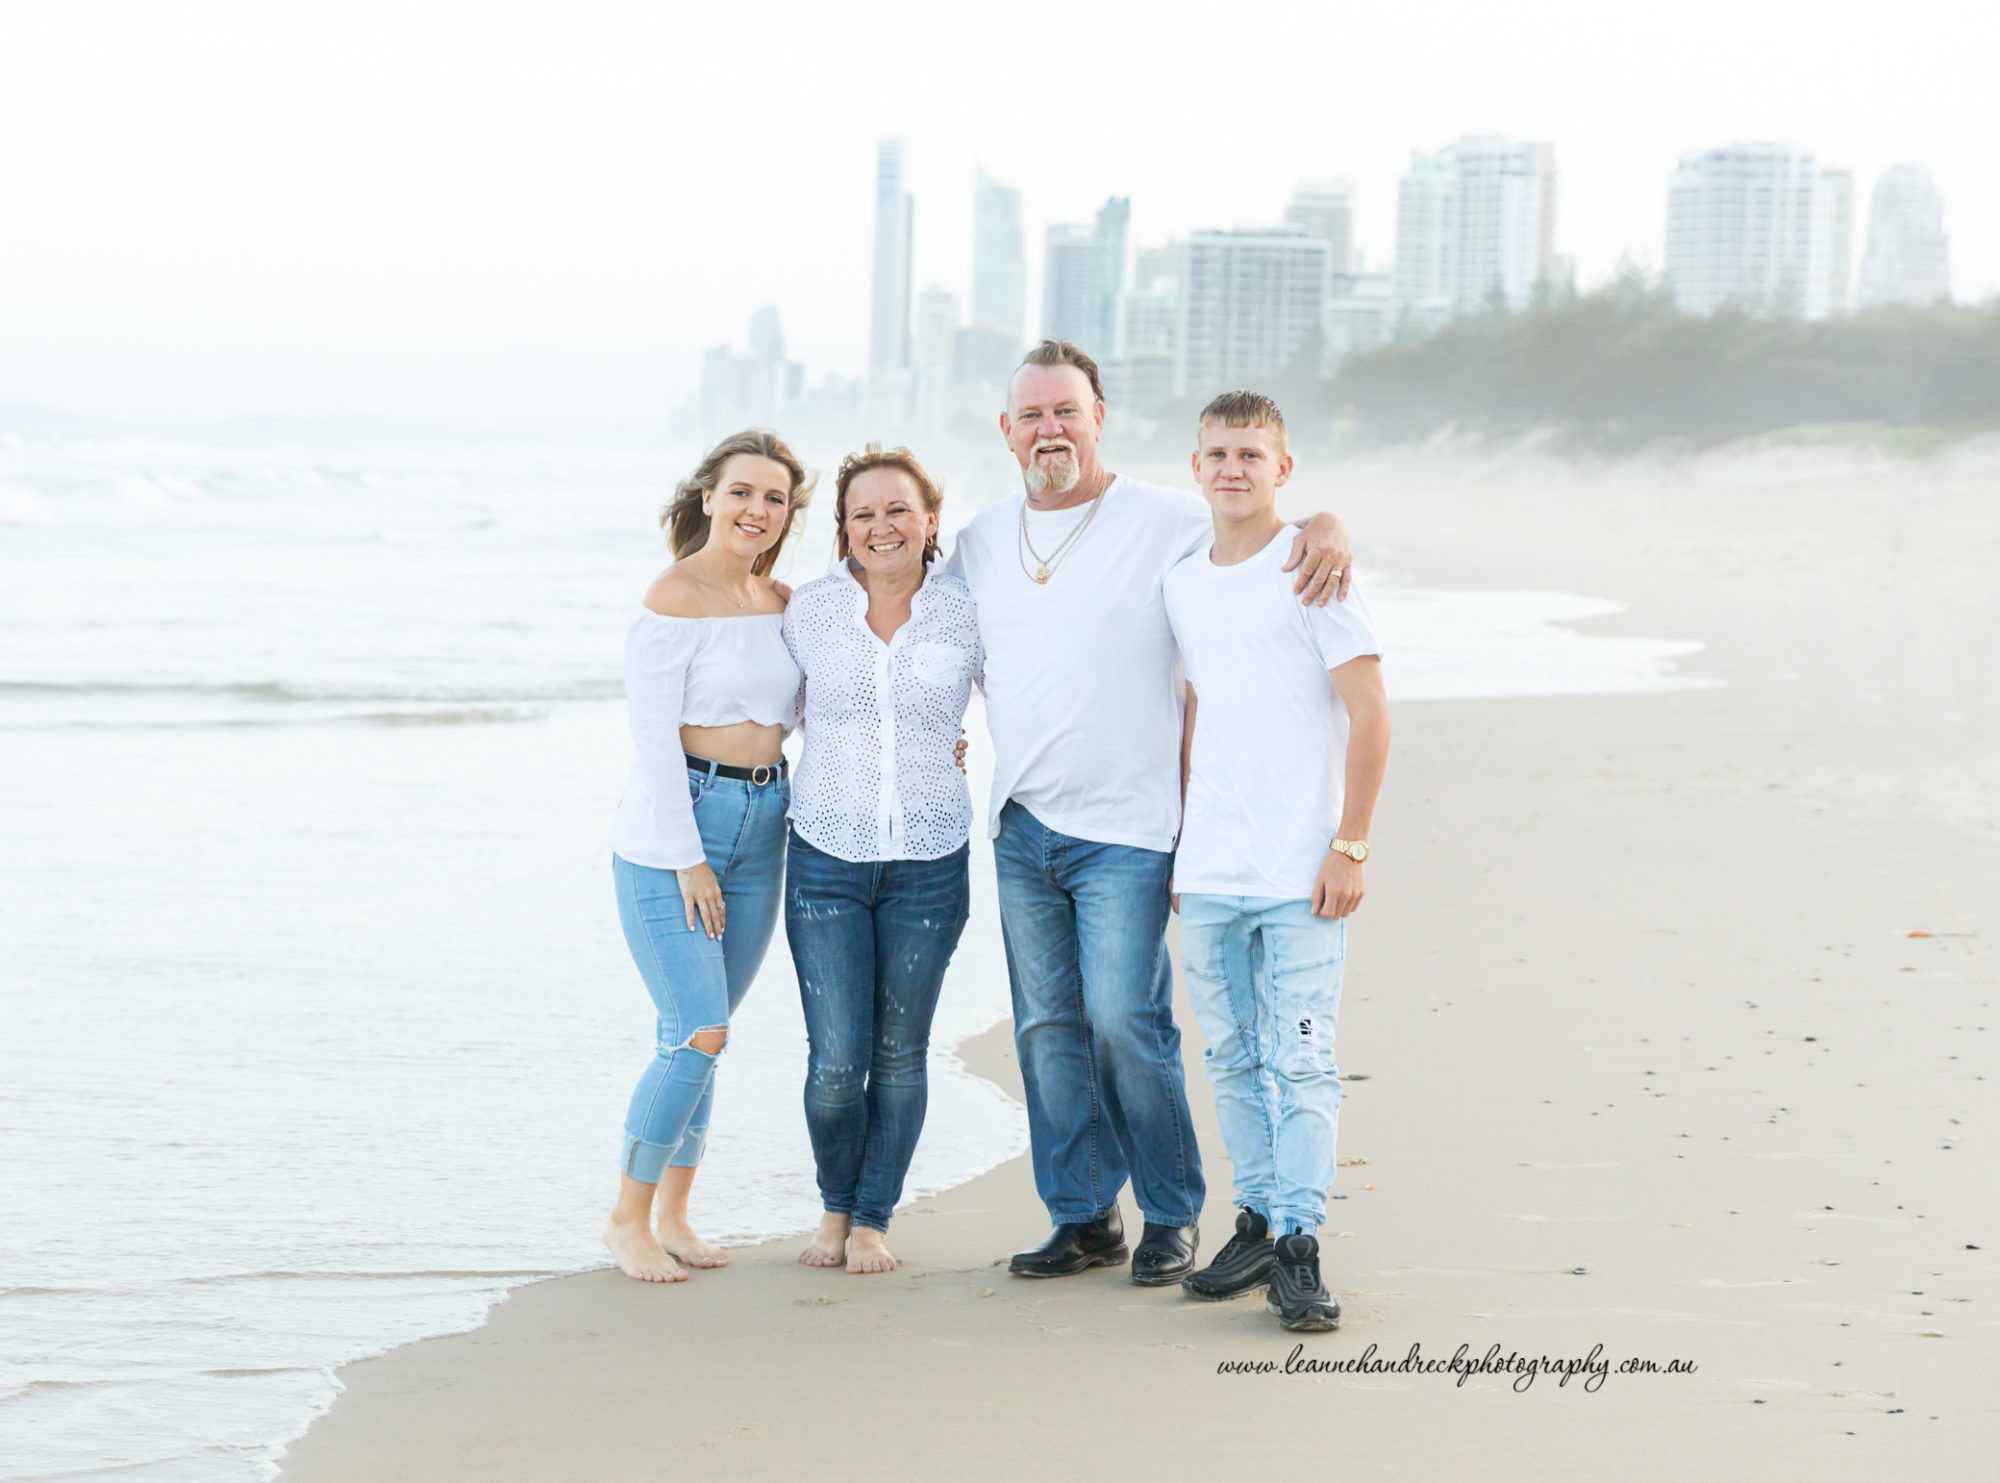 Family Photographer Gold Coast - Leanne Handreck PHotography